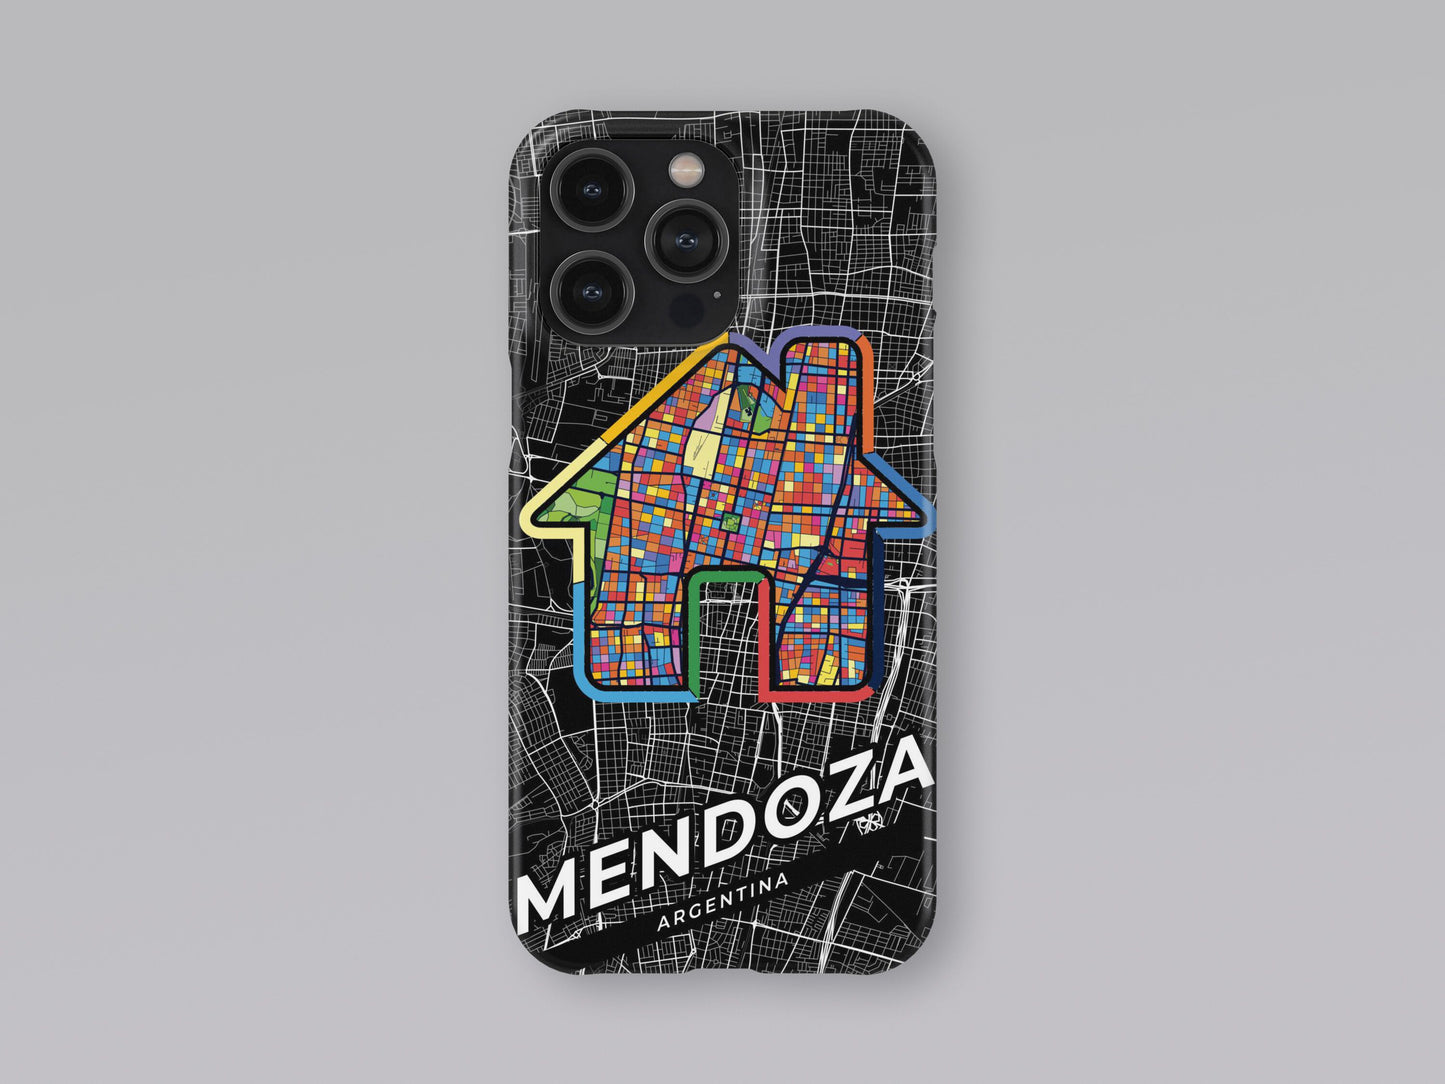 Mendoza Argentina slim phone case with colorful icon 3